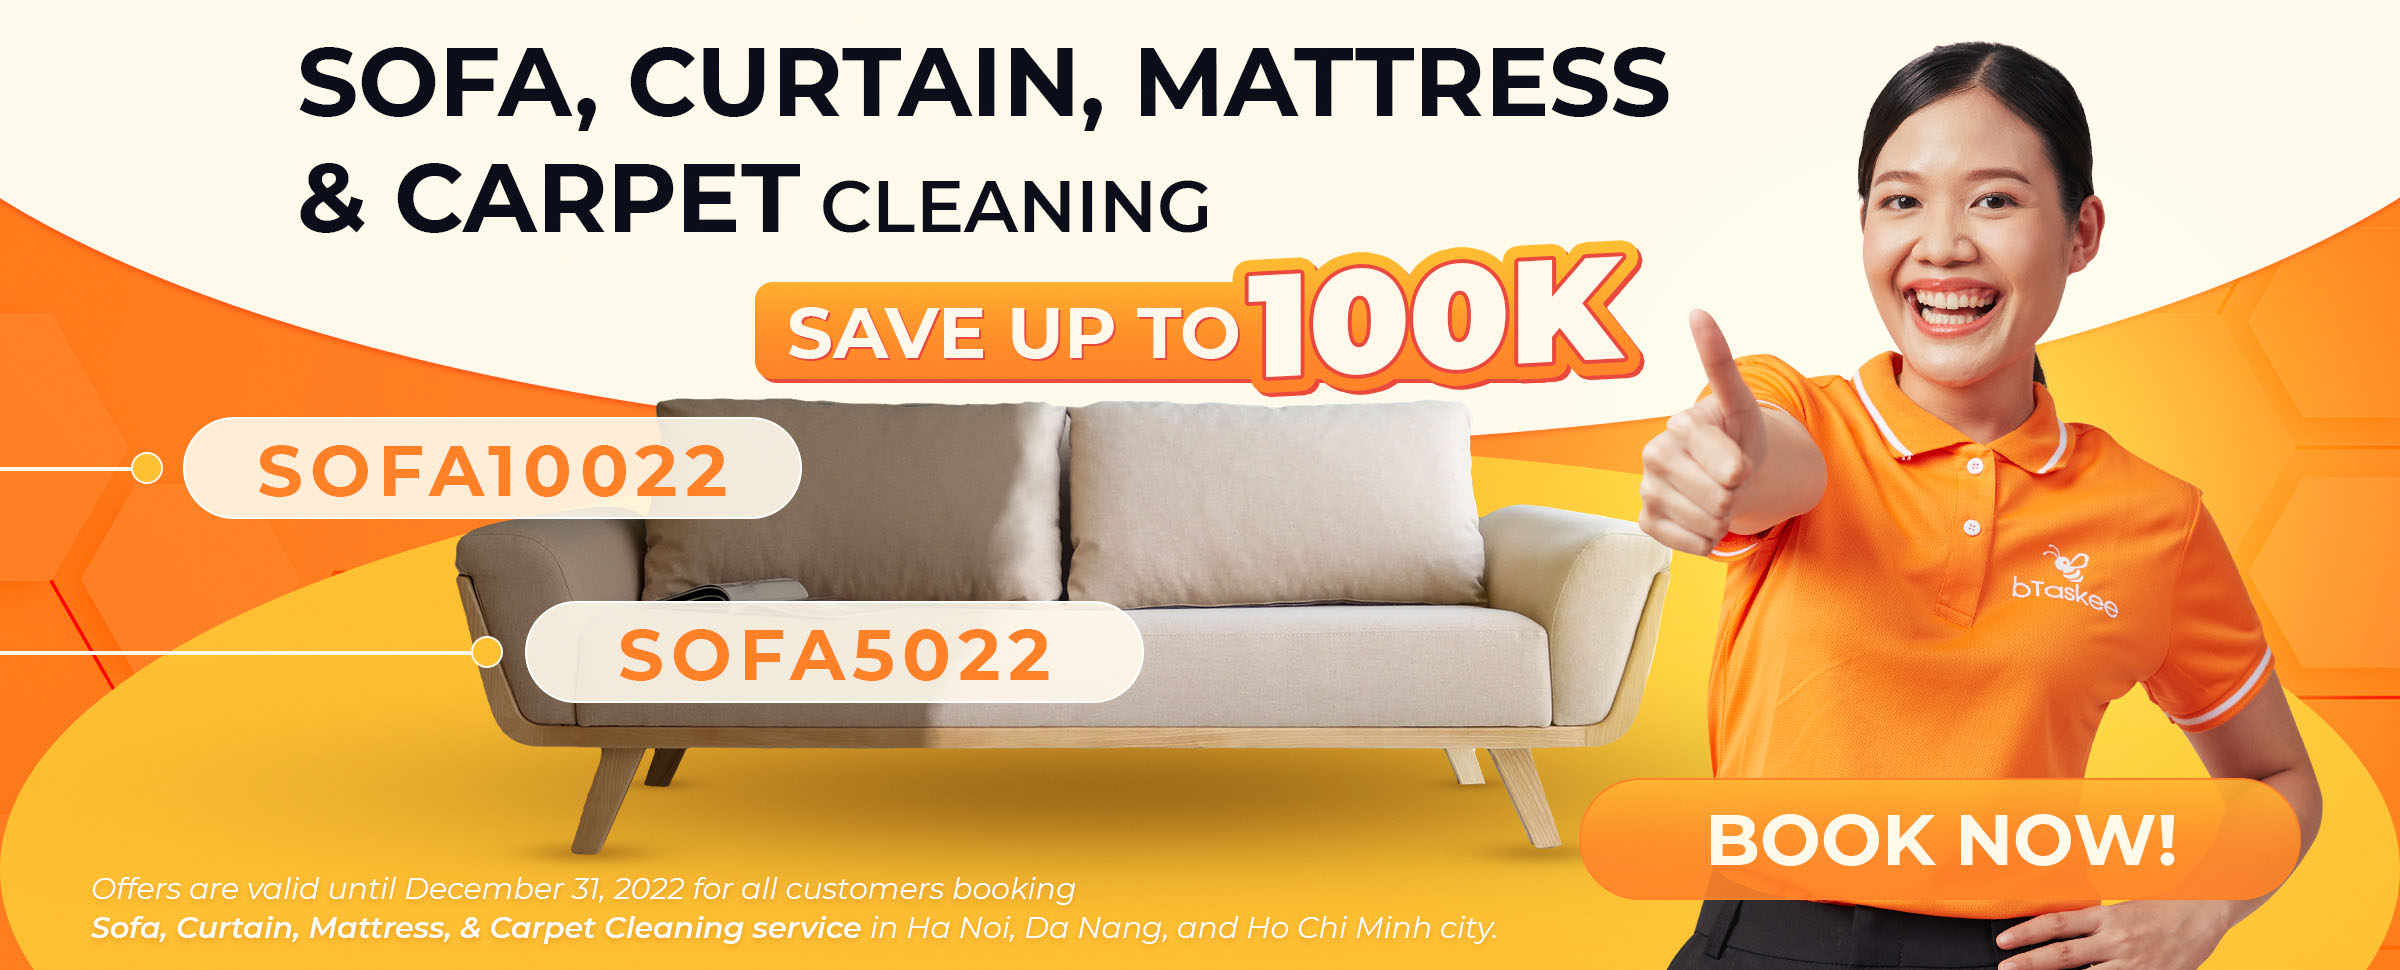 btaskee 100k off sofa curtain mattress carpet cleaning service